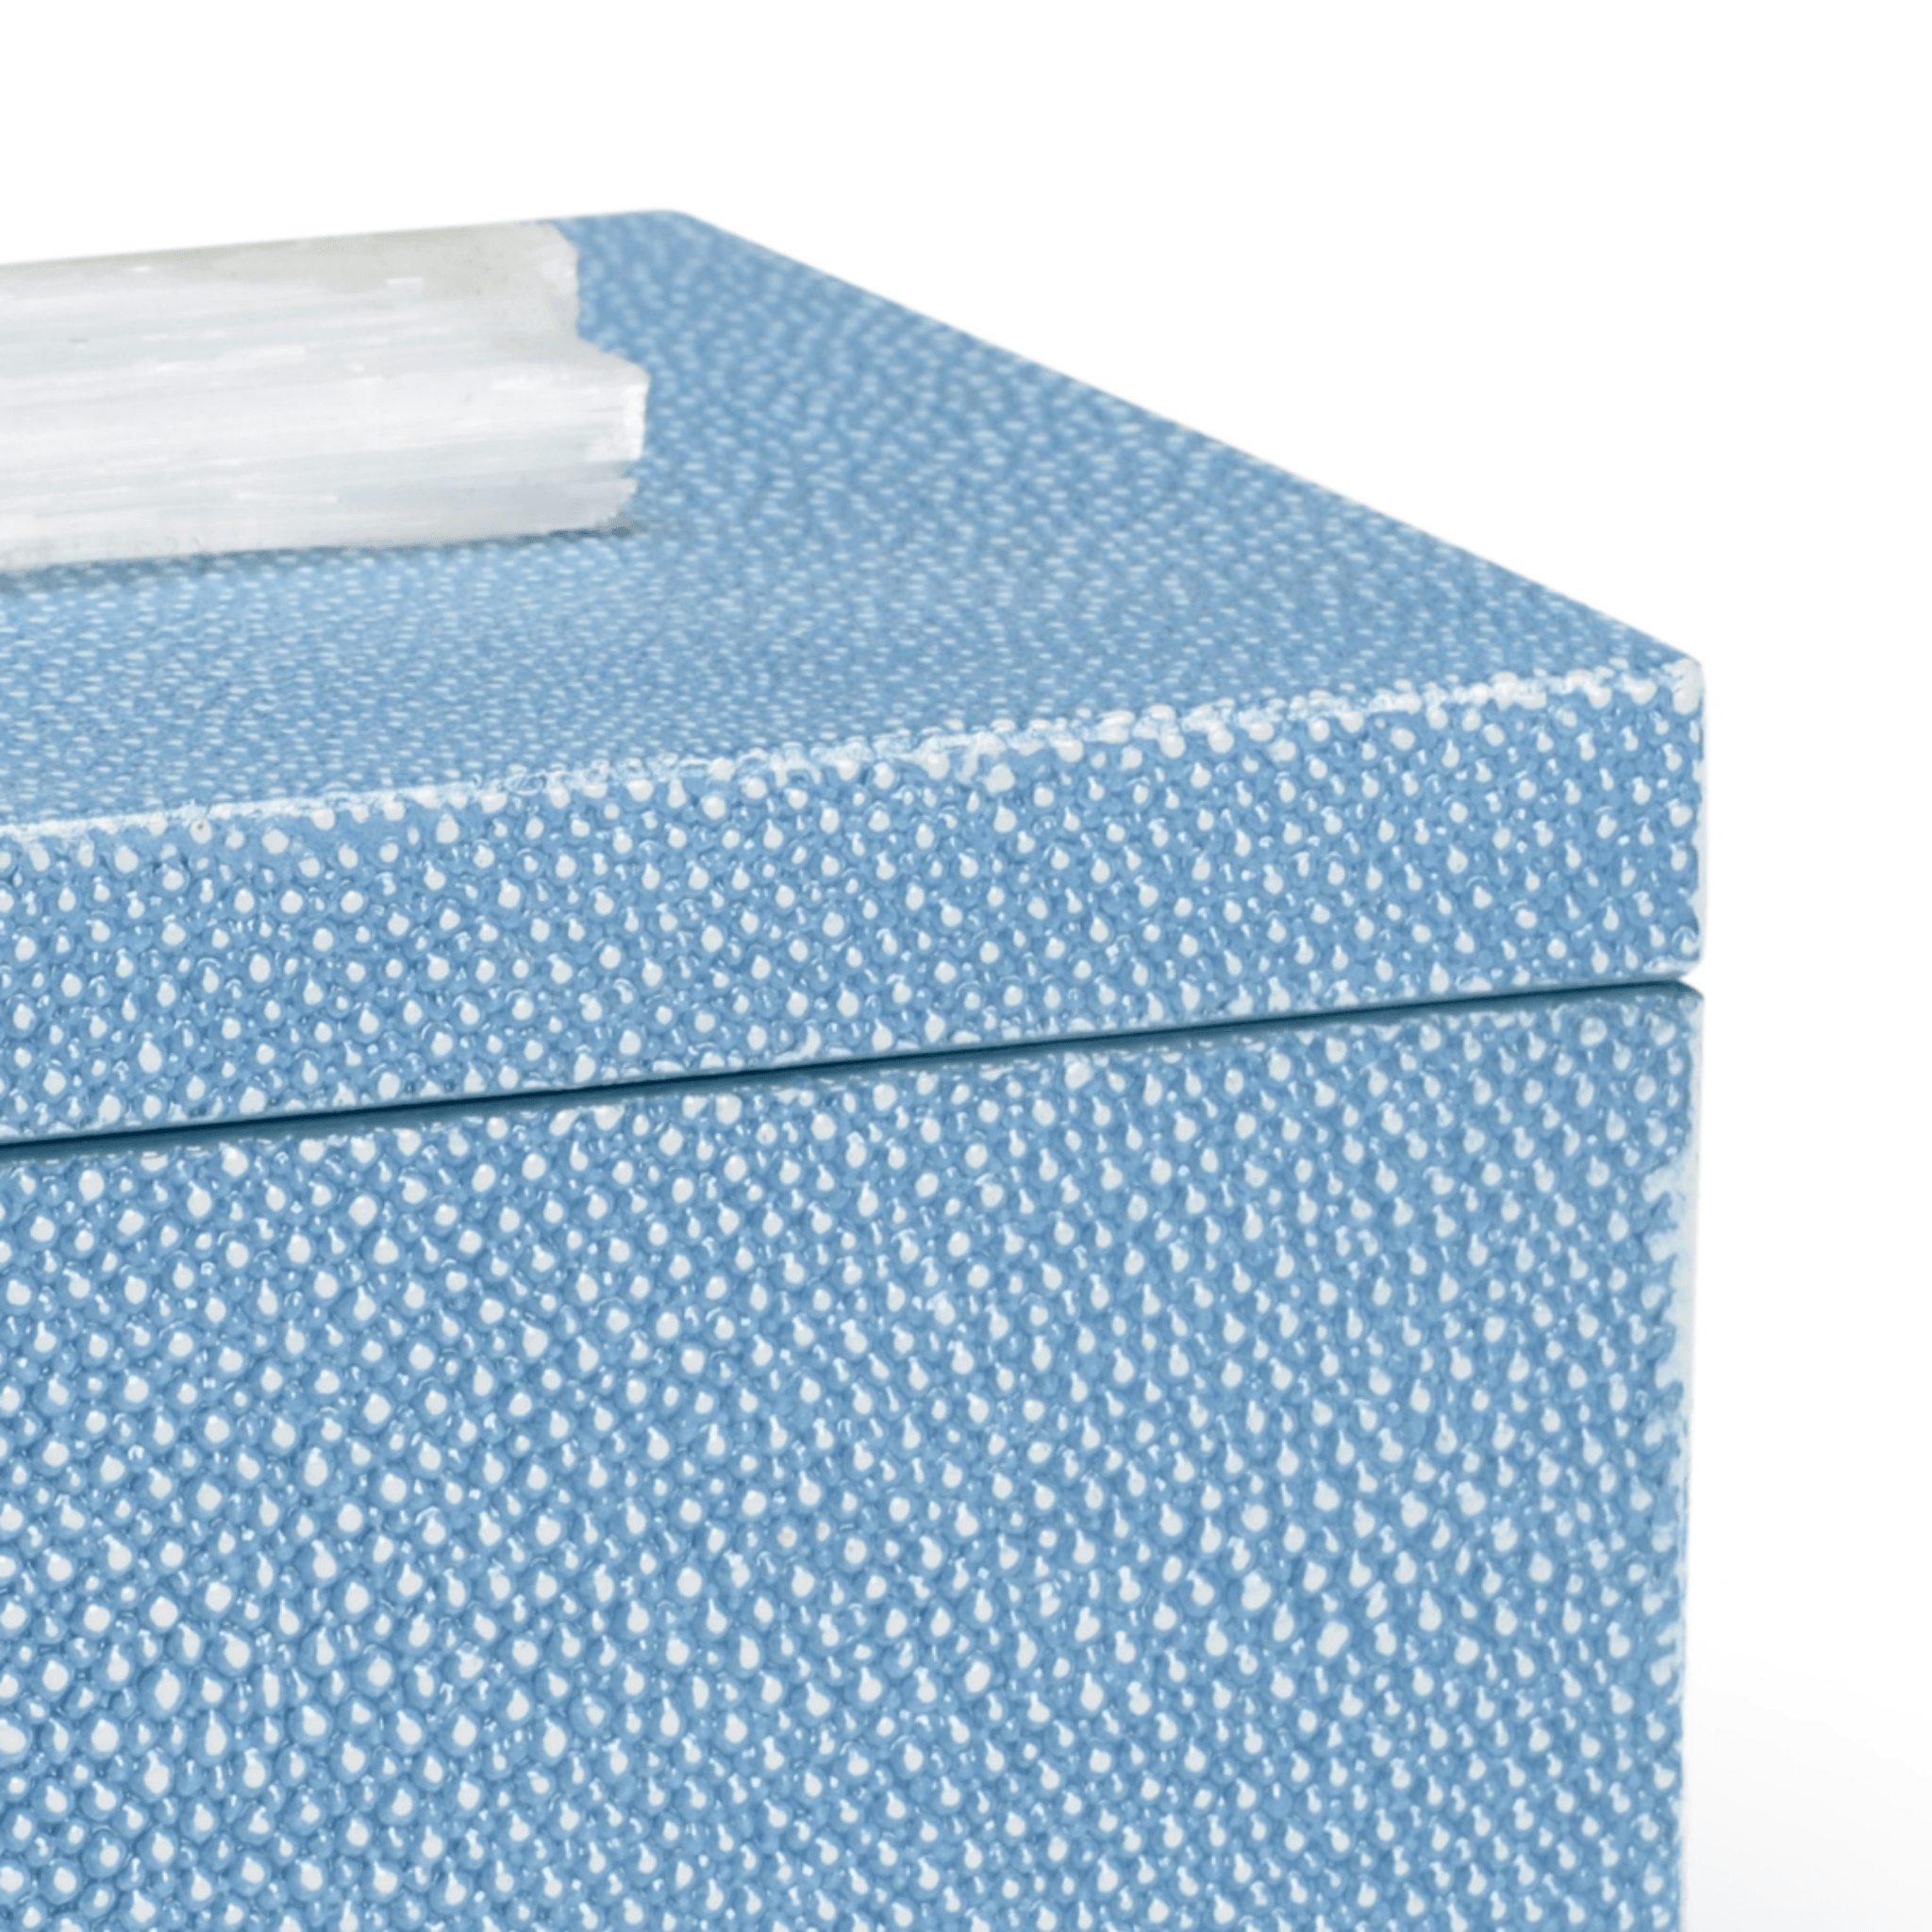 Rhinestone Storage Box – The Glitzy Bluebonnet